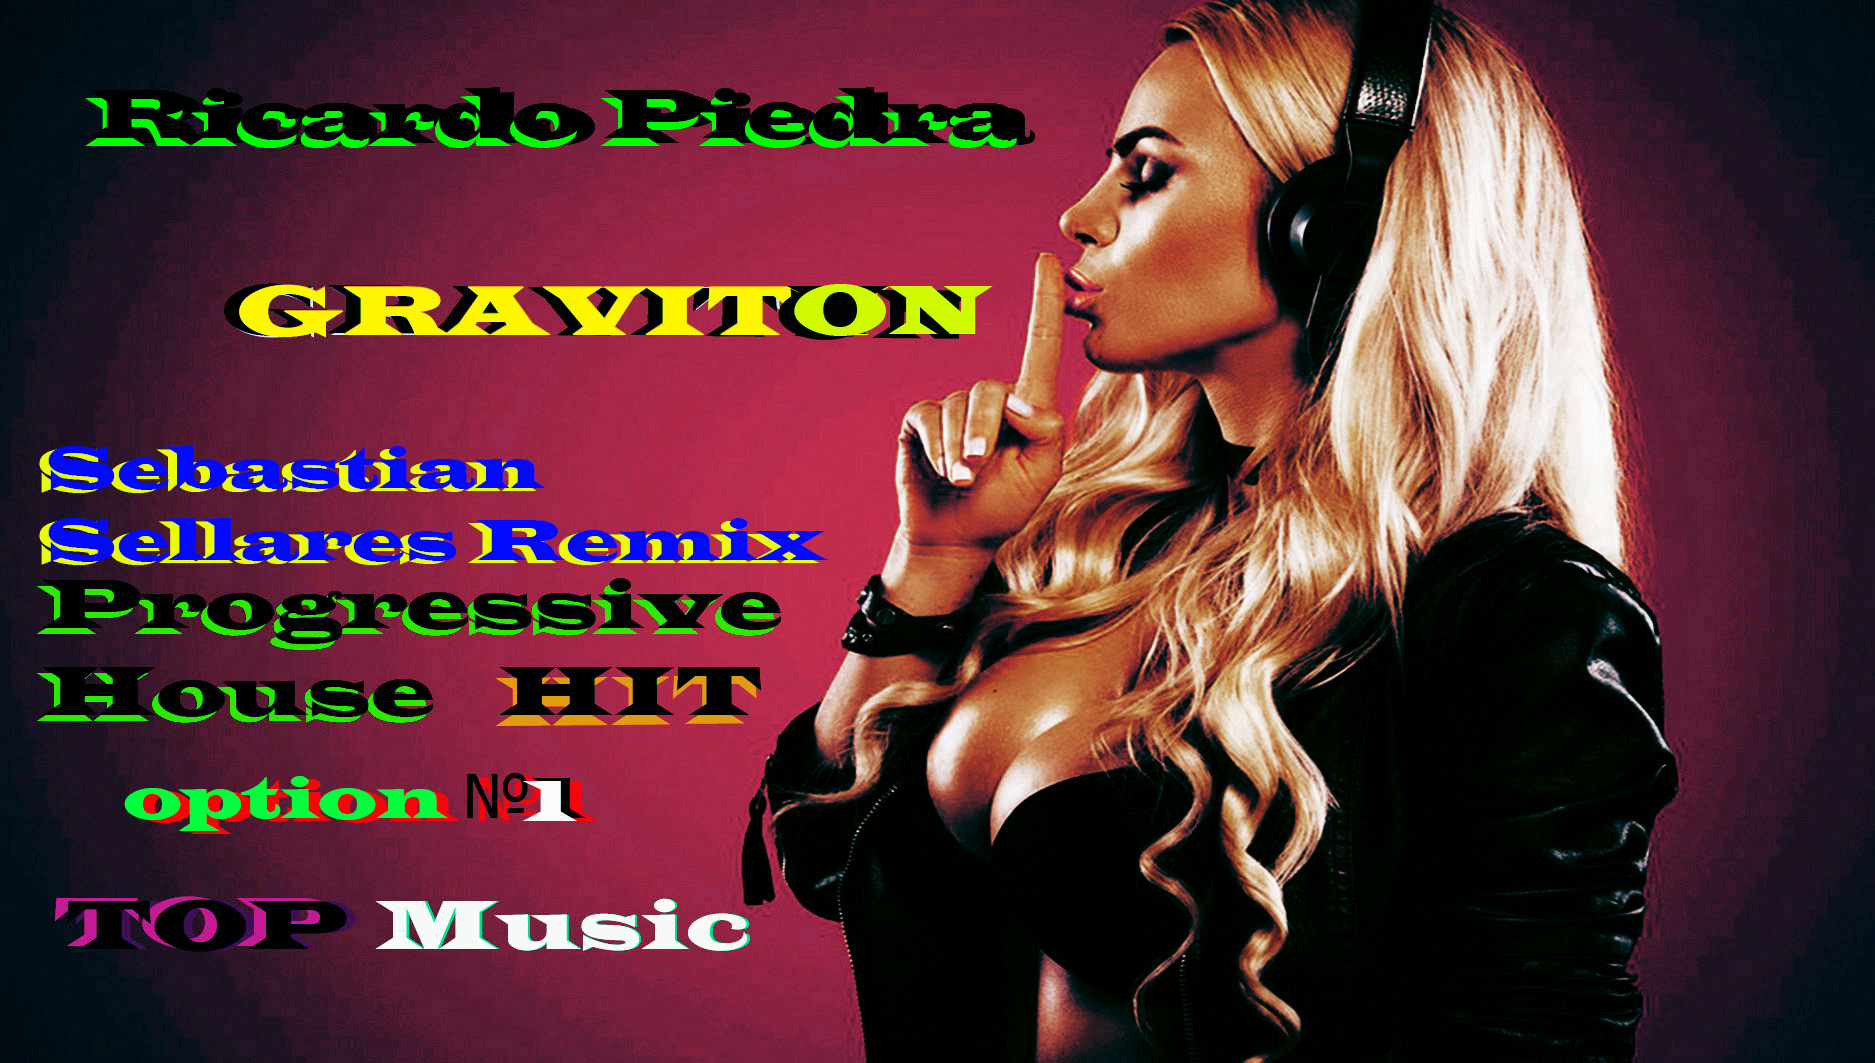 Gravity Ricardo Piedra Sebastián, Melodic Progressive House Hit,Мелодик Прогрессив Хаус Хит,#22 .mp4